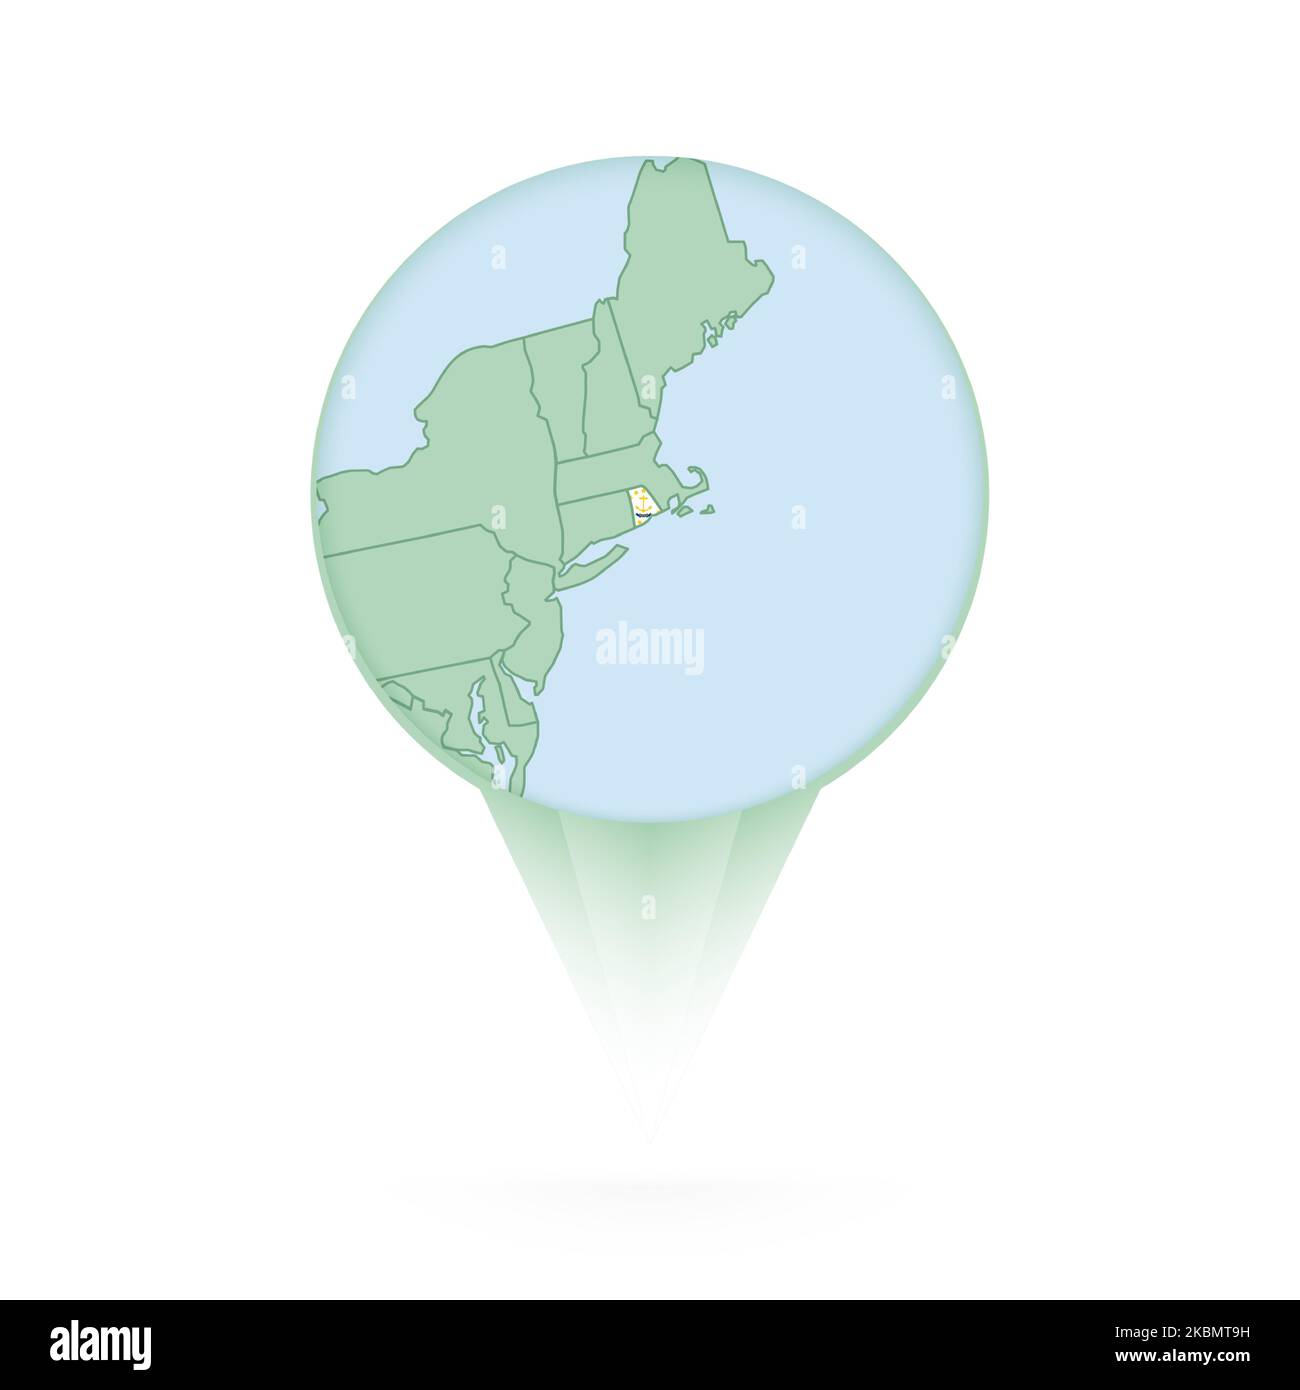 Rhode Island map, stylish location icon with Rhode Island map and flag. Green pin icon. Stock Vector